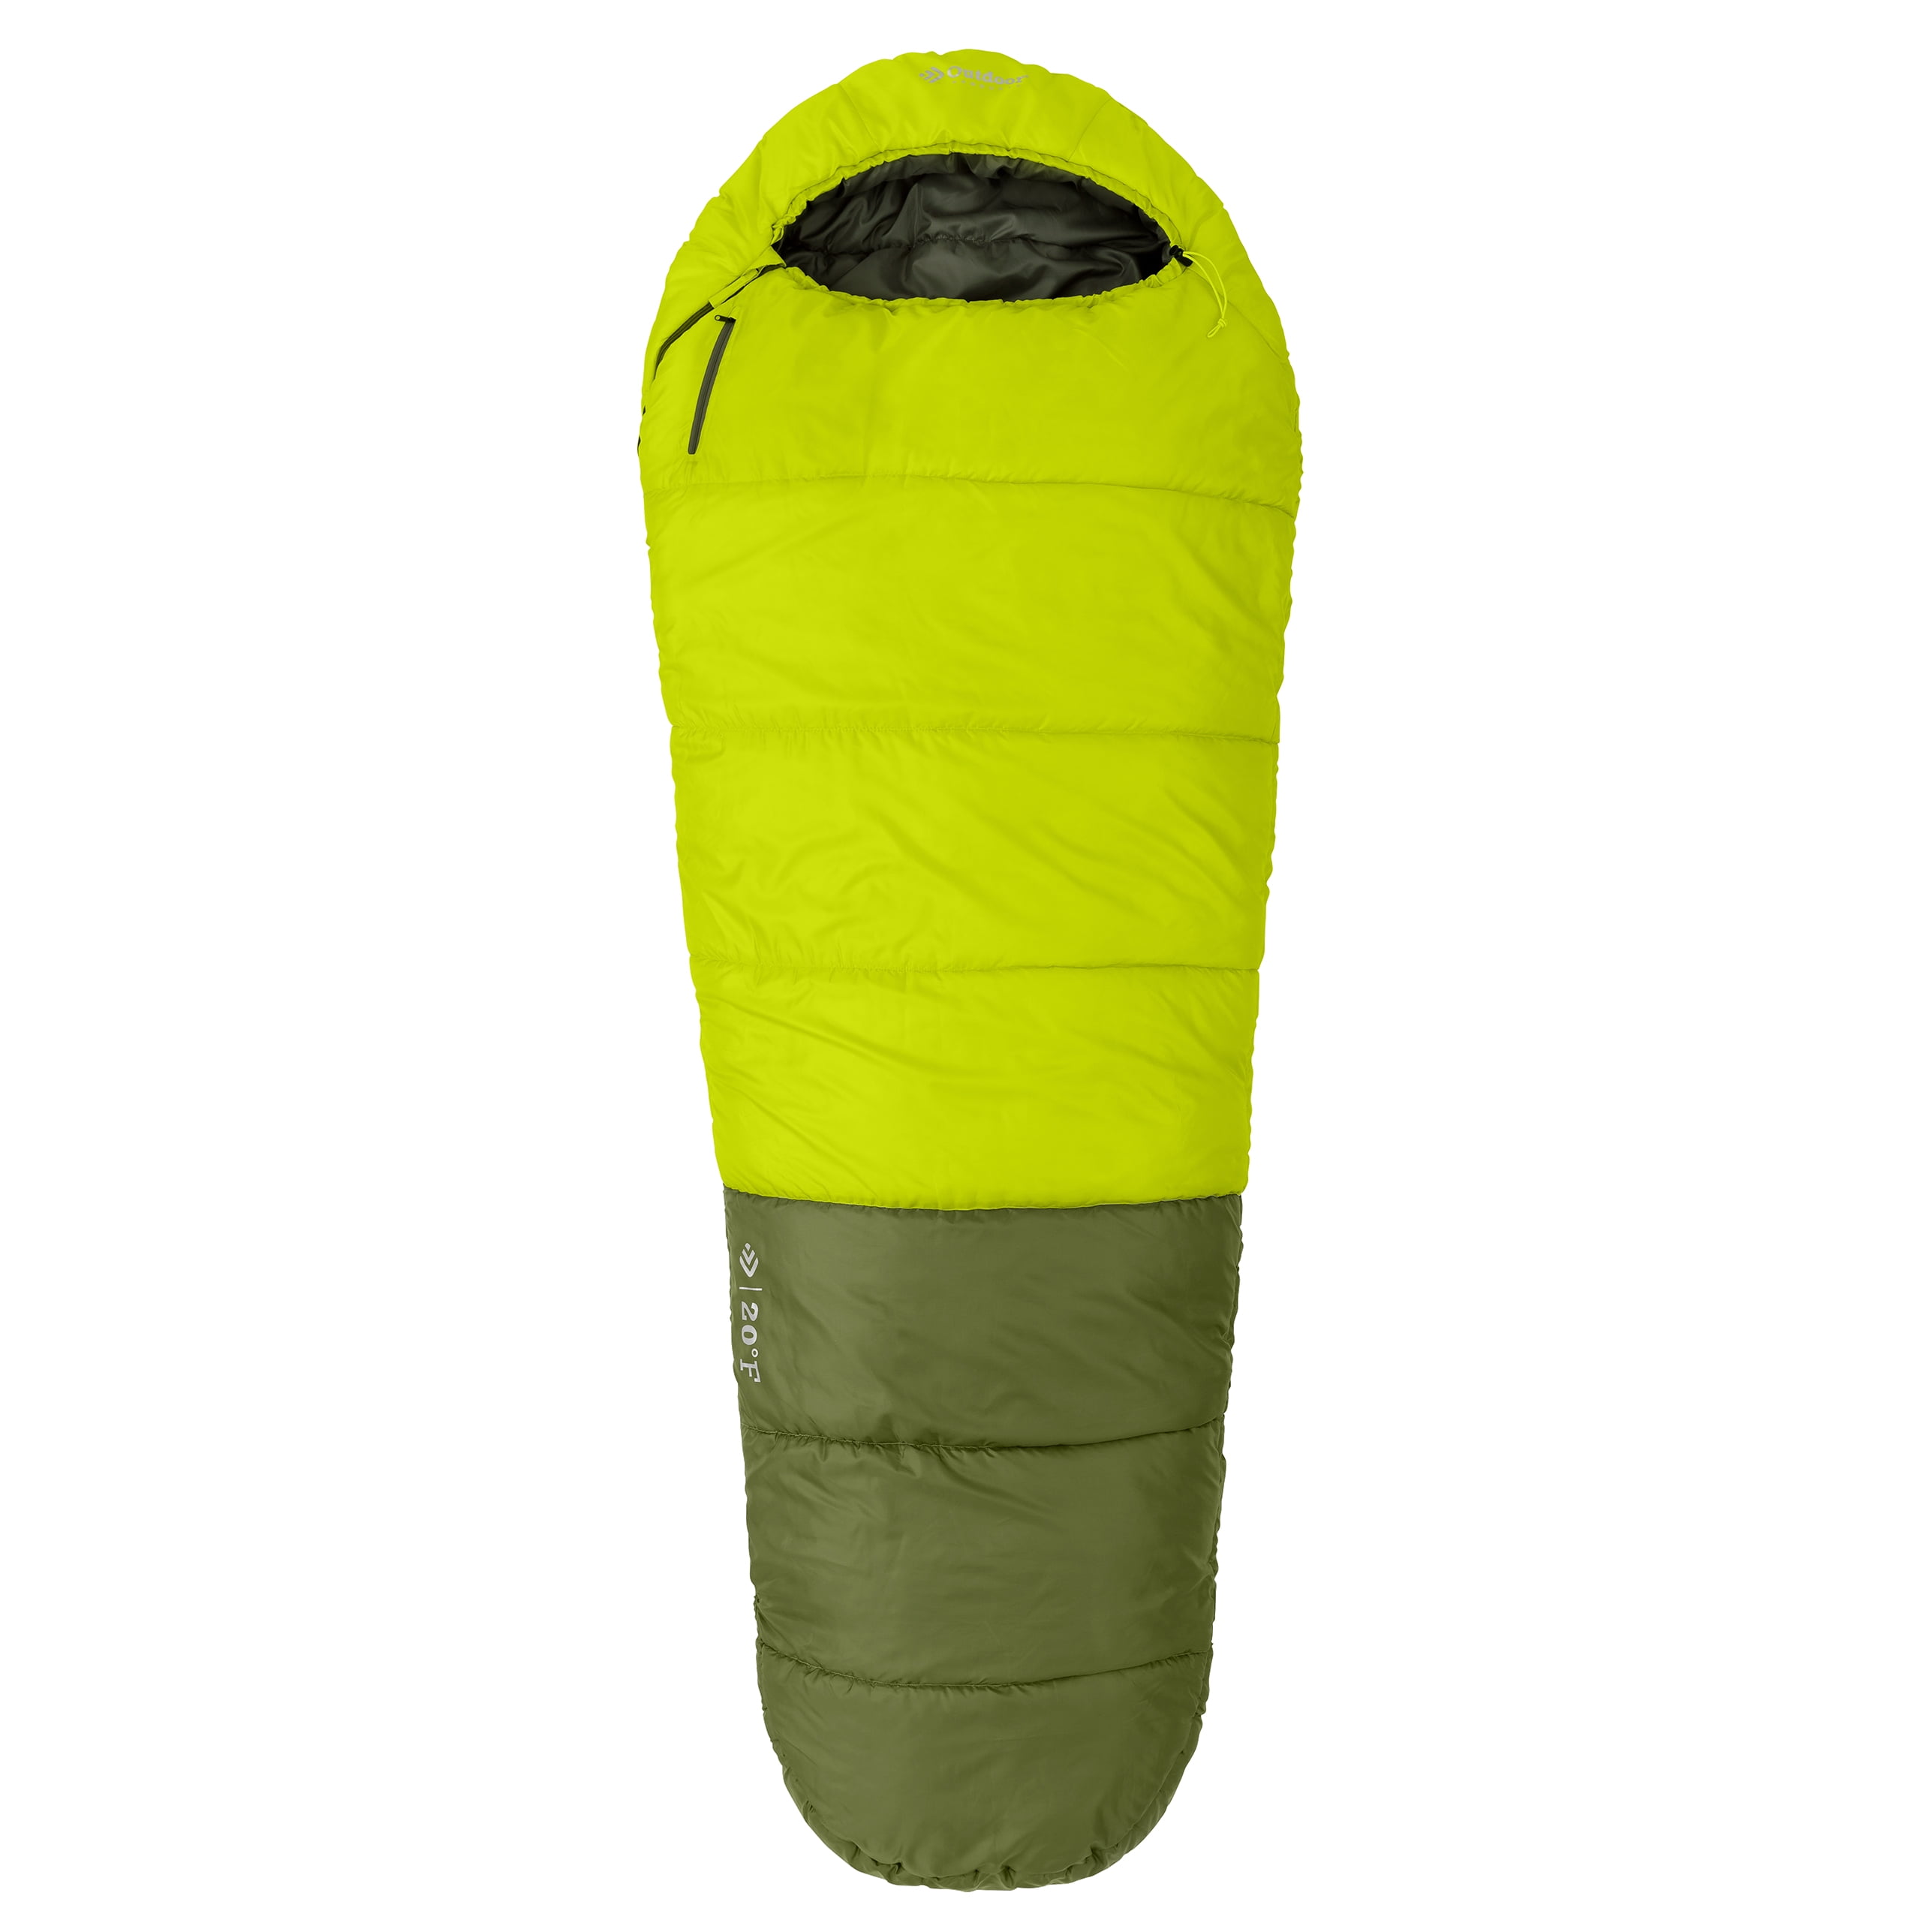 Outdoor Products 20 Degree Mummy Sleeping Bag, Regular Length - Walmart.com